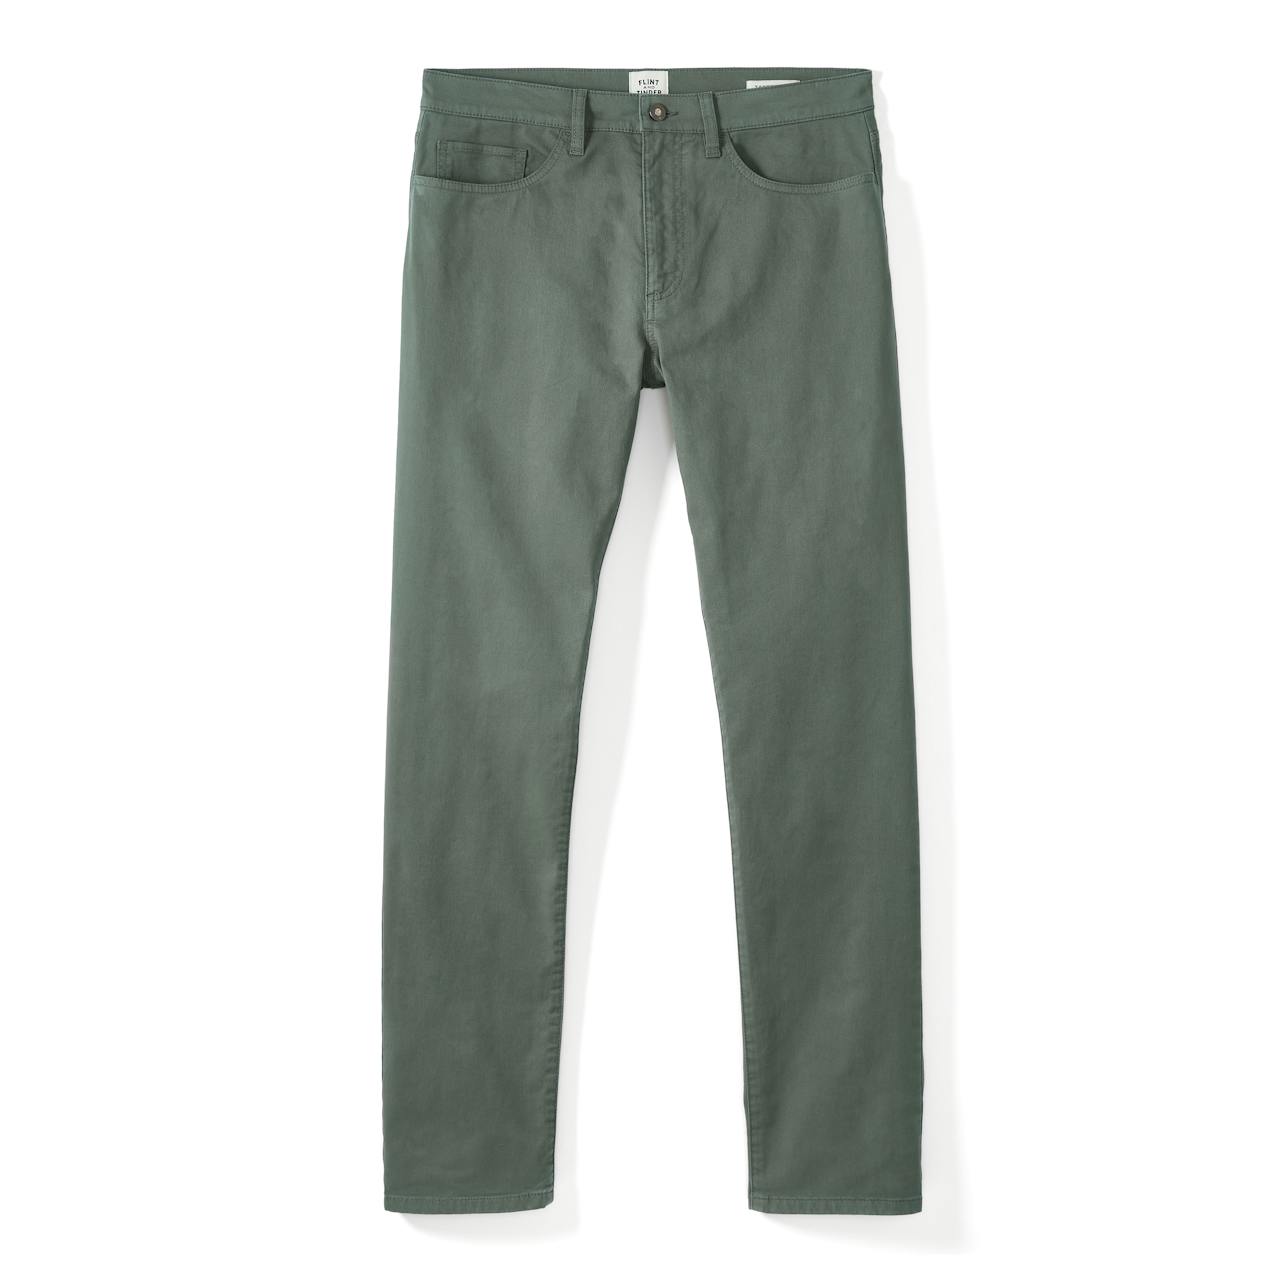 Tilley Endurables Pants Fits Mens 36 x 29 Green Casual Chino